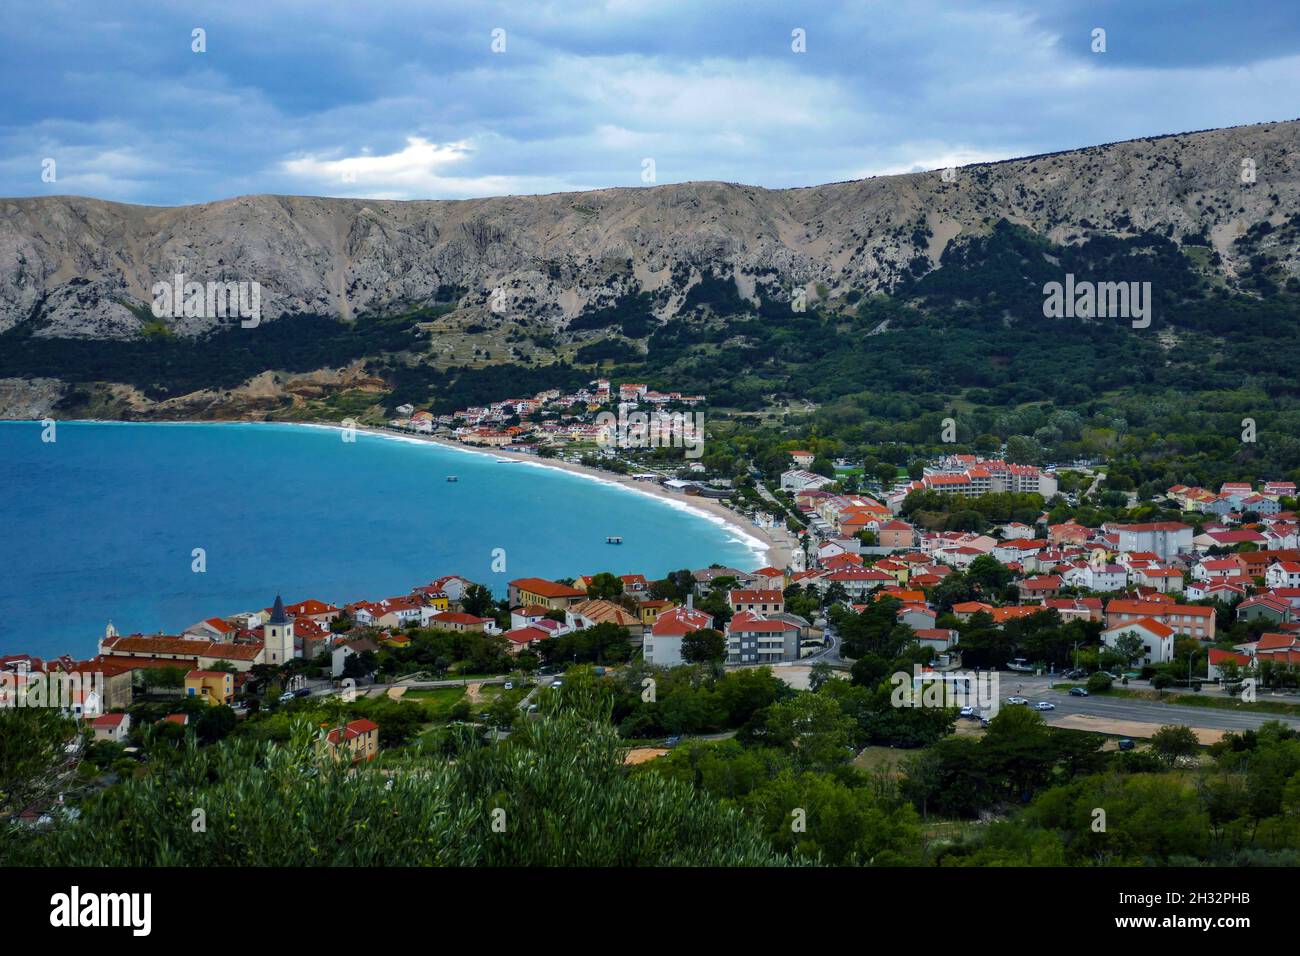 The small tourist resort of Baska, Baška on the island of Krk, Croatia Stock Photo